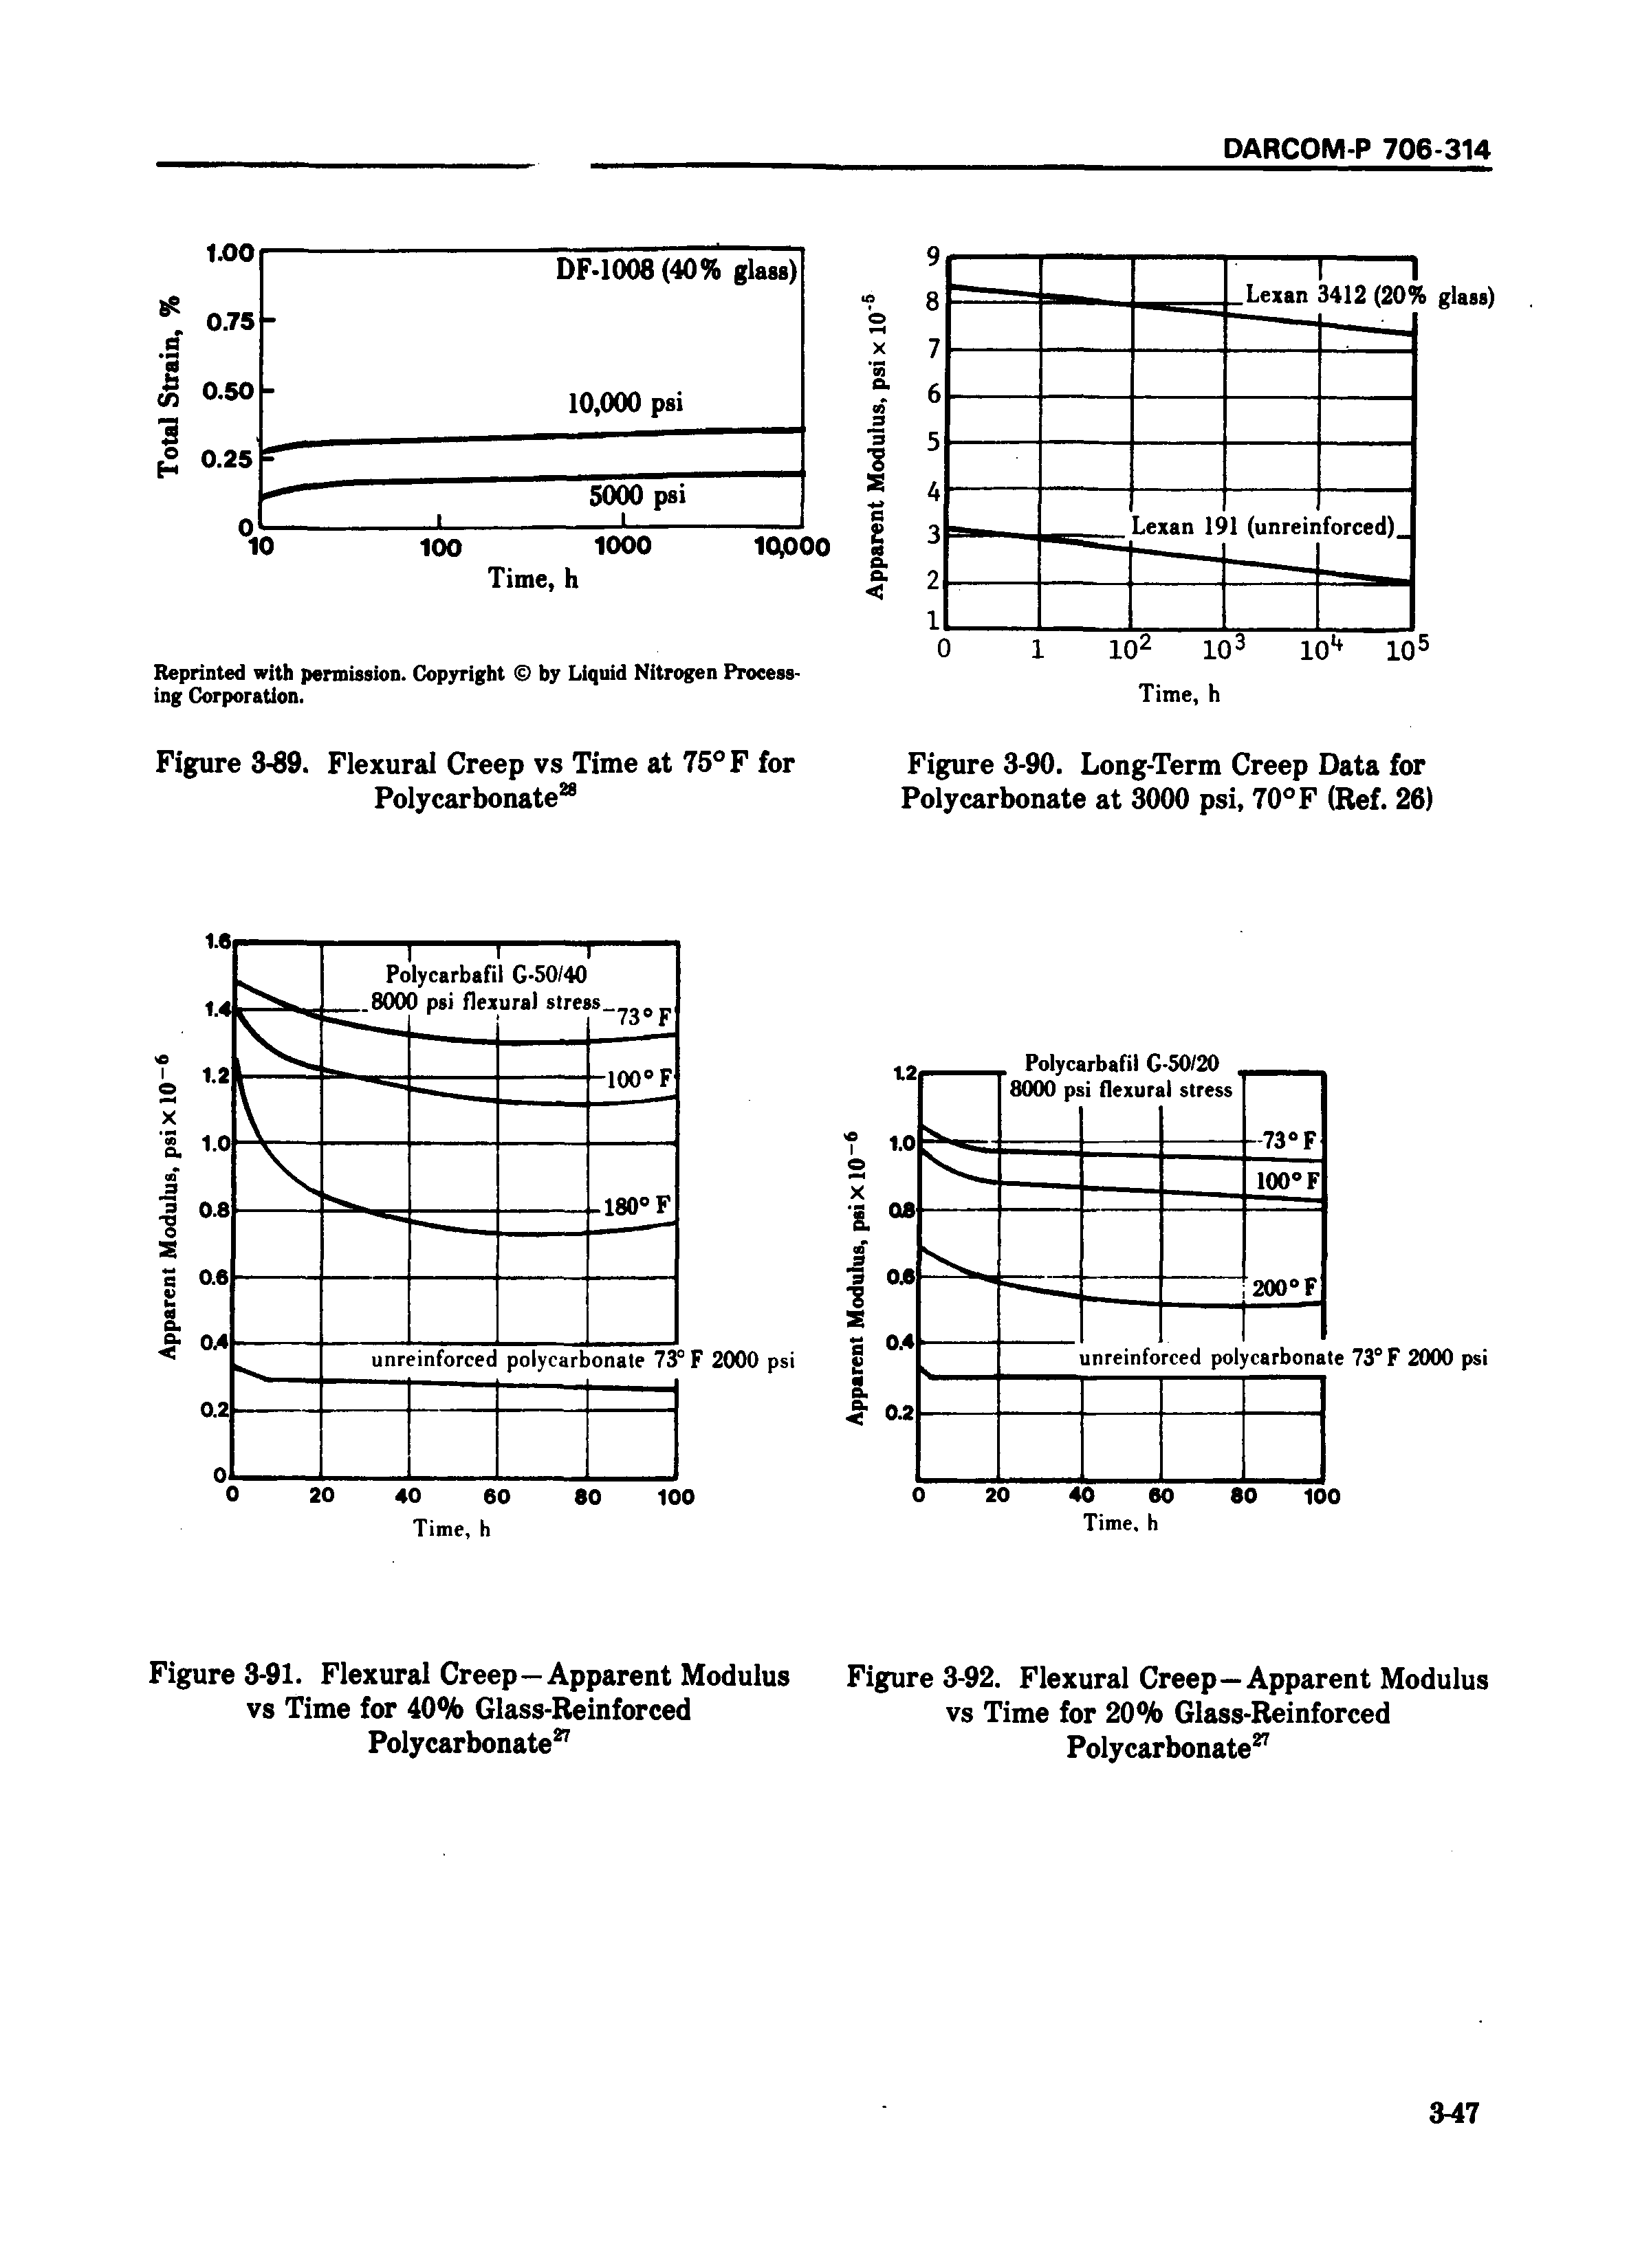 Figure 3-89. Flexural Creep vs Time at 75 F for Polycar bonate ...